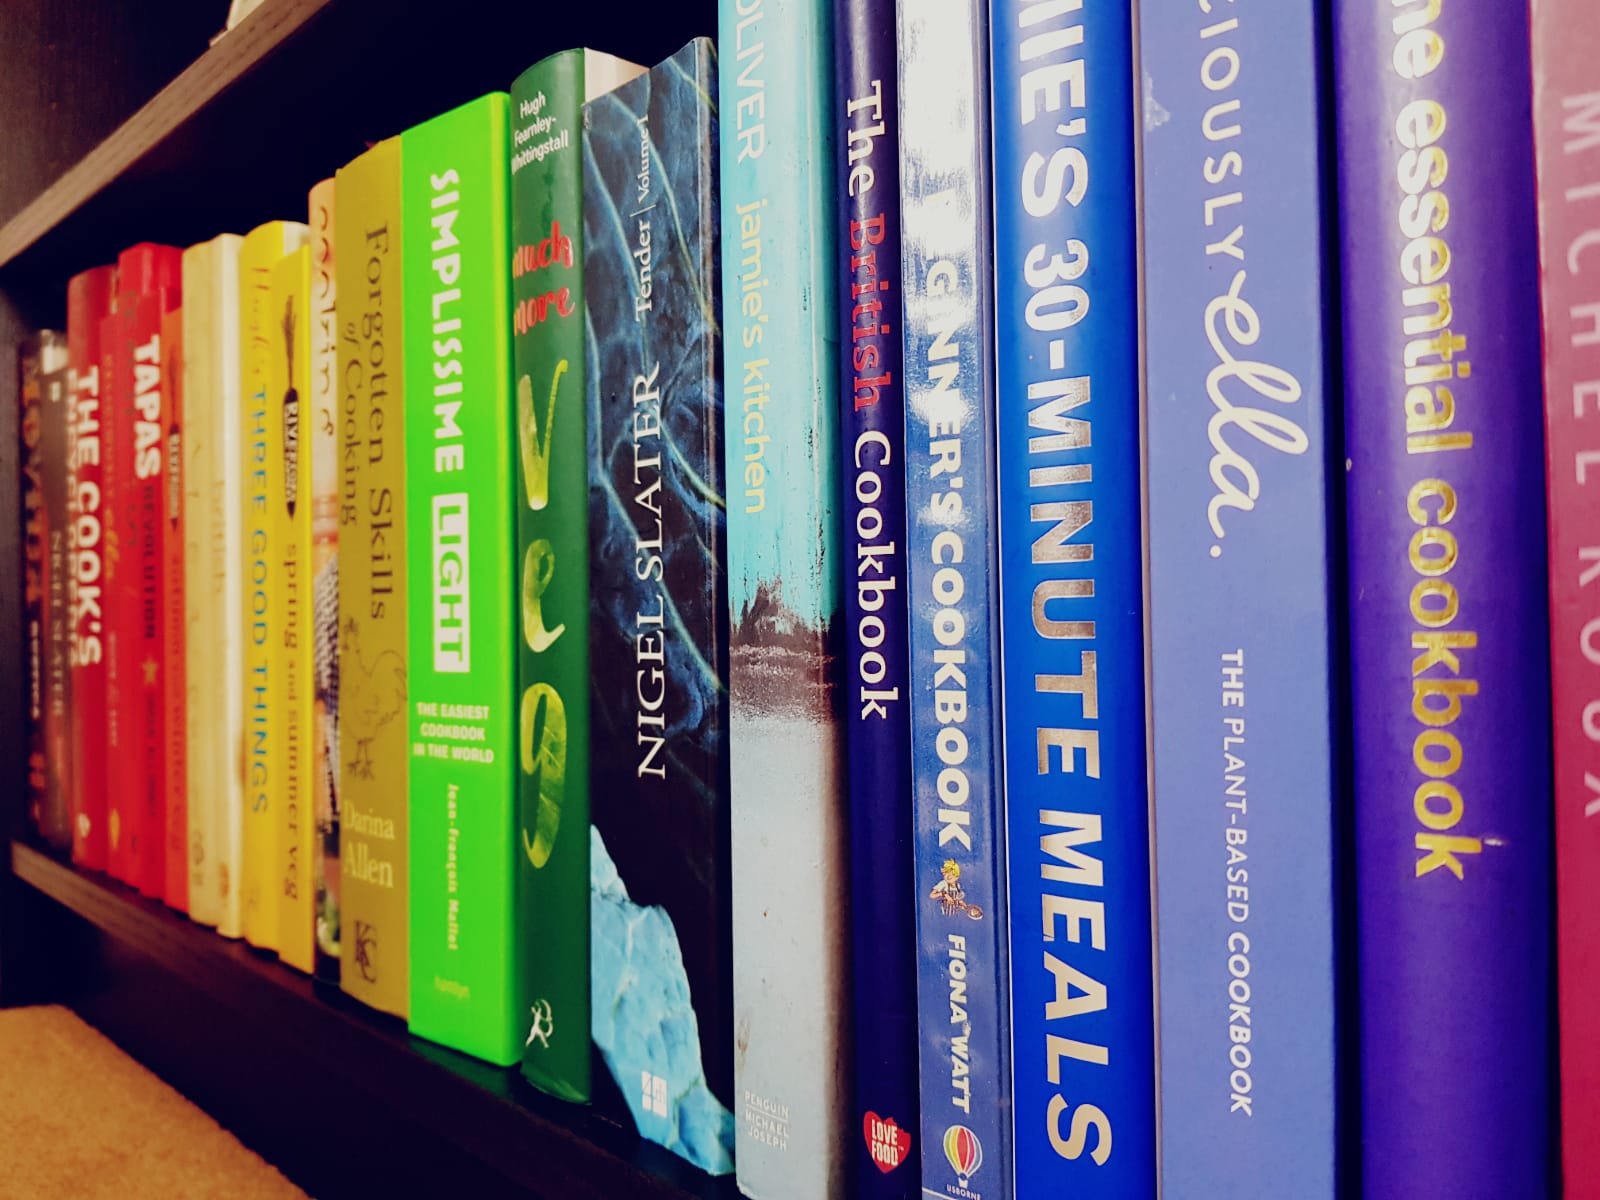 example-recipe-books-rainbow-shelf